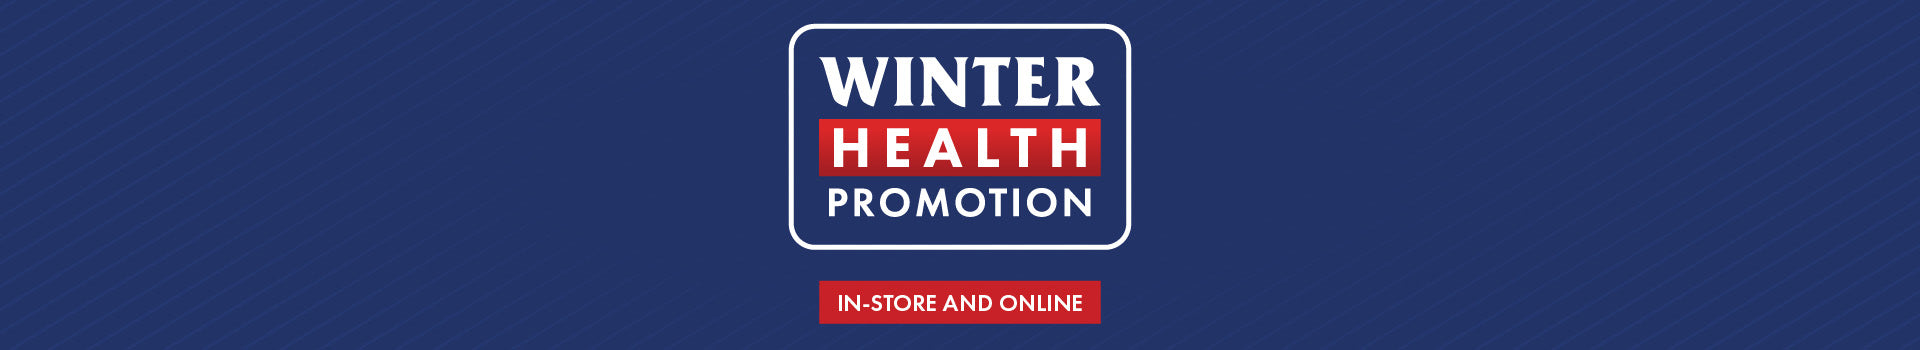 Winter Health Promotion